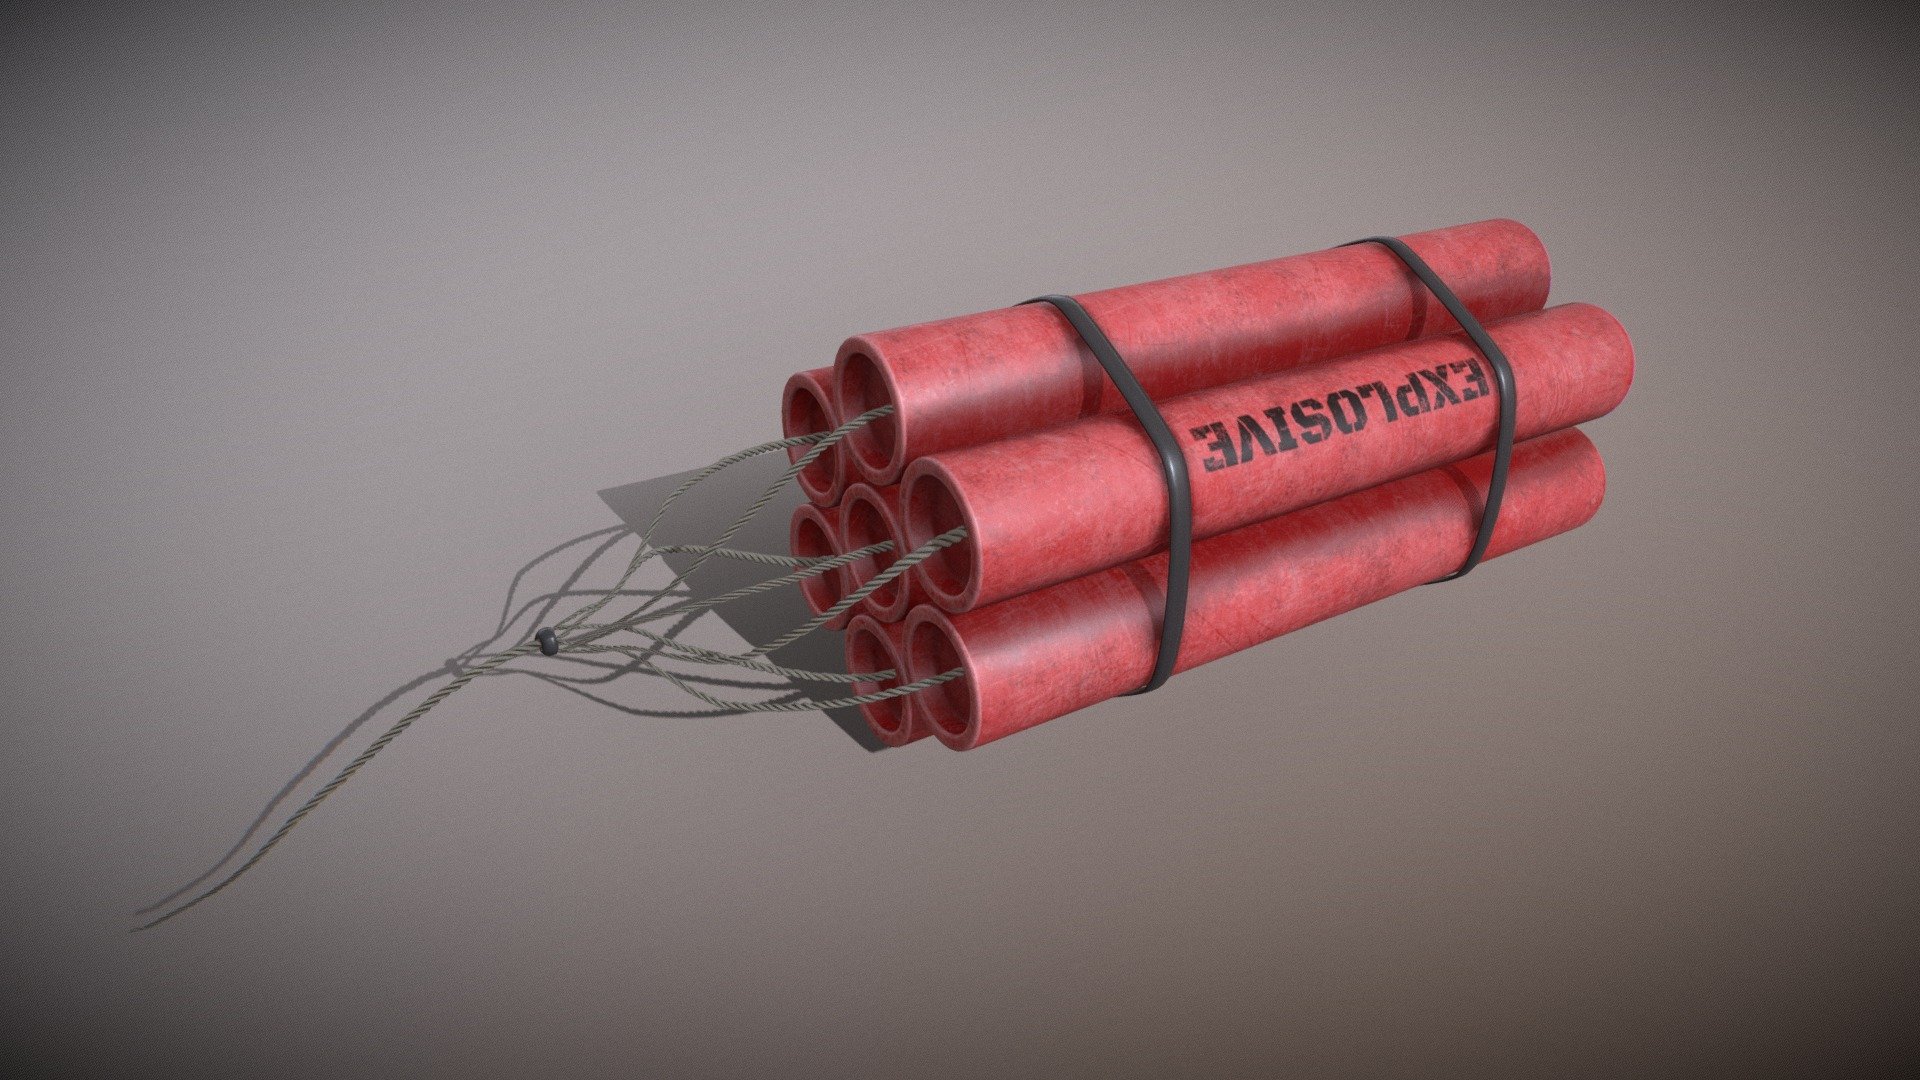 TNT HighExplosive Bomb Buy Royalty Free 3D model by Incg5764